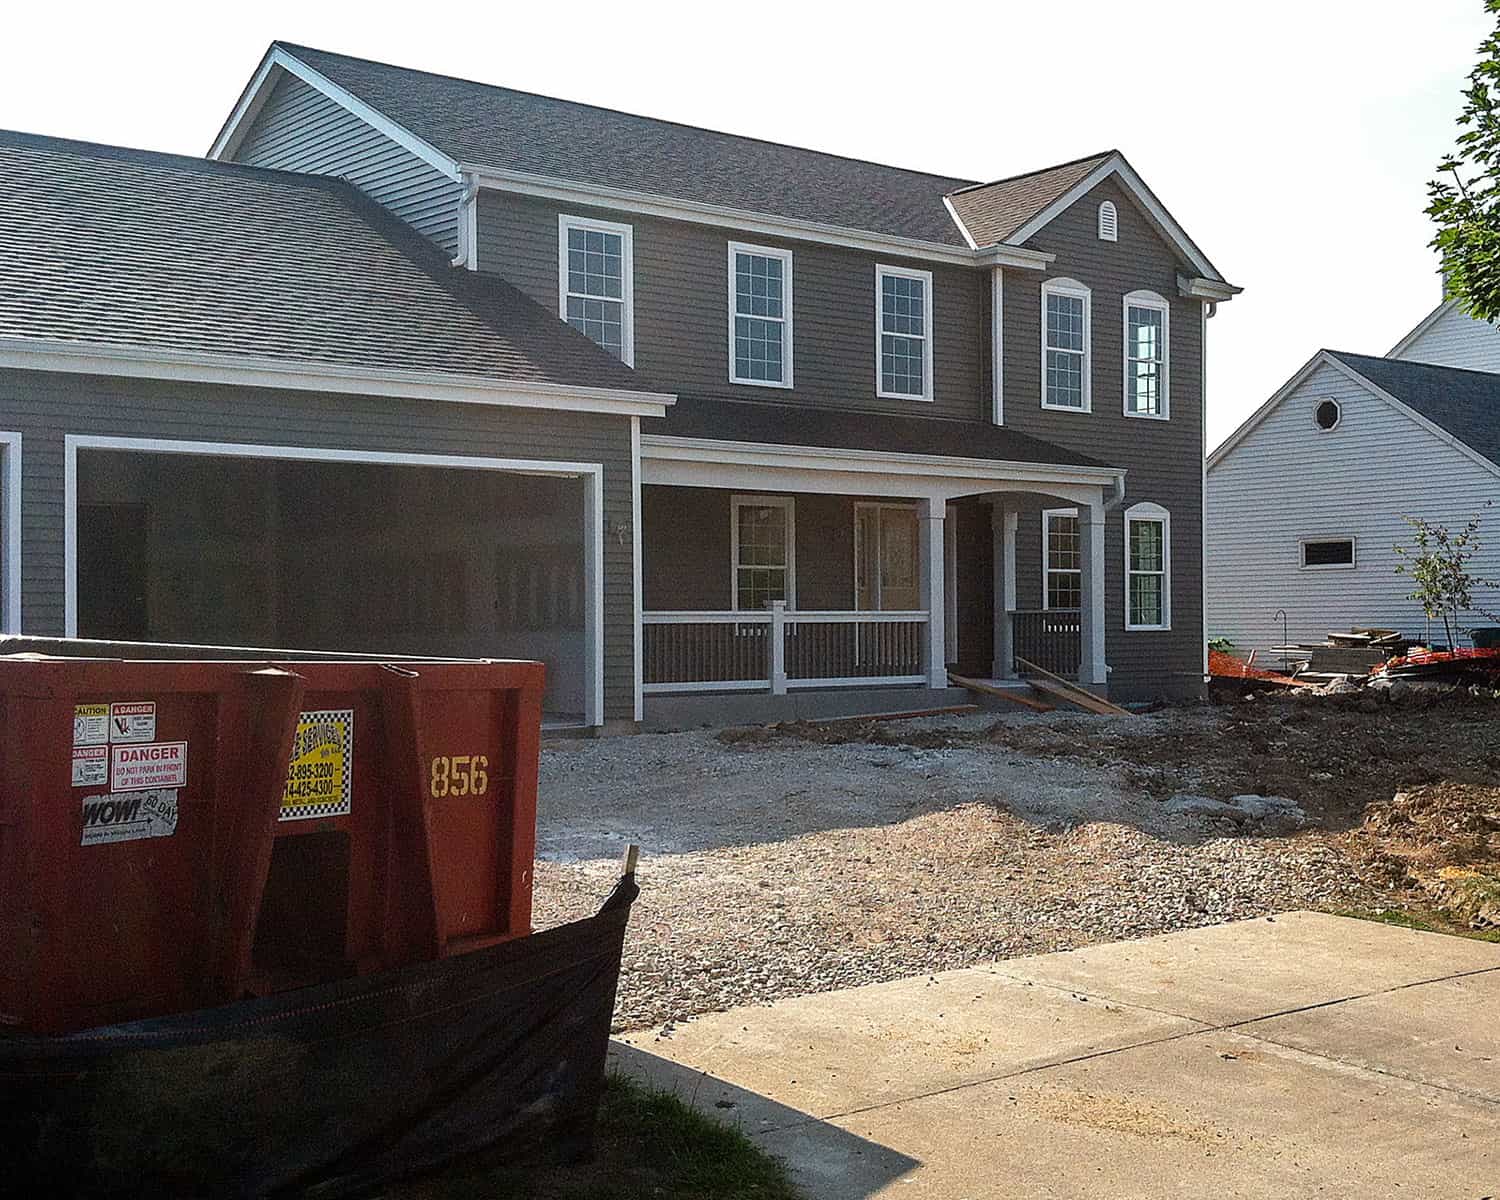 Lemel Homes Teardown, Rebuild, & Infill - Fire Rebuild - 2 story gray house near completion